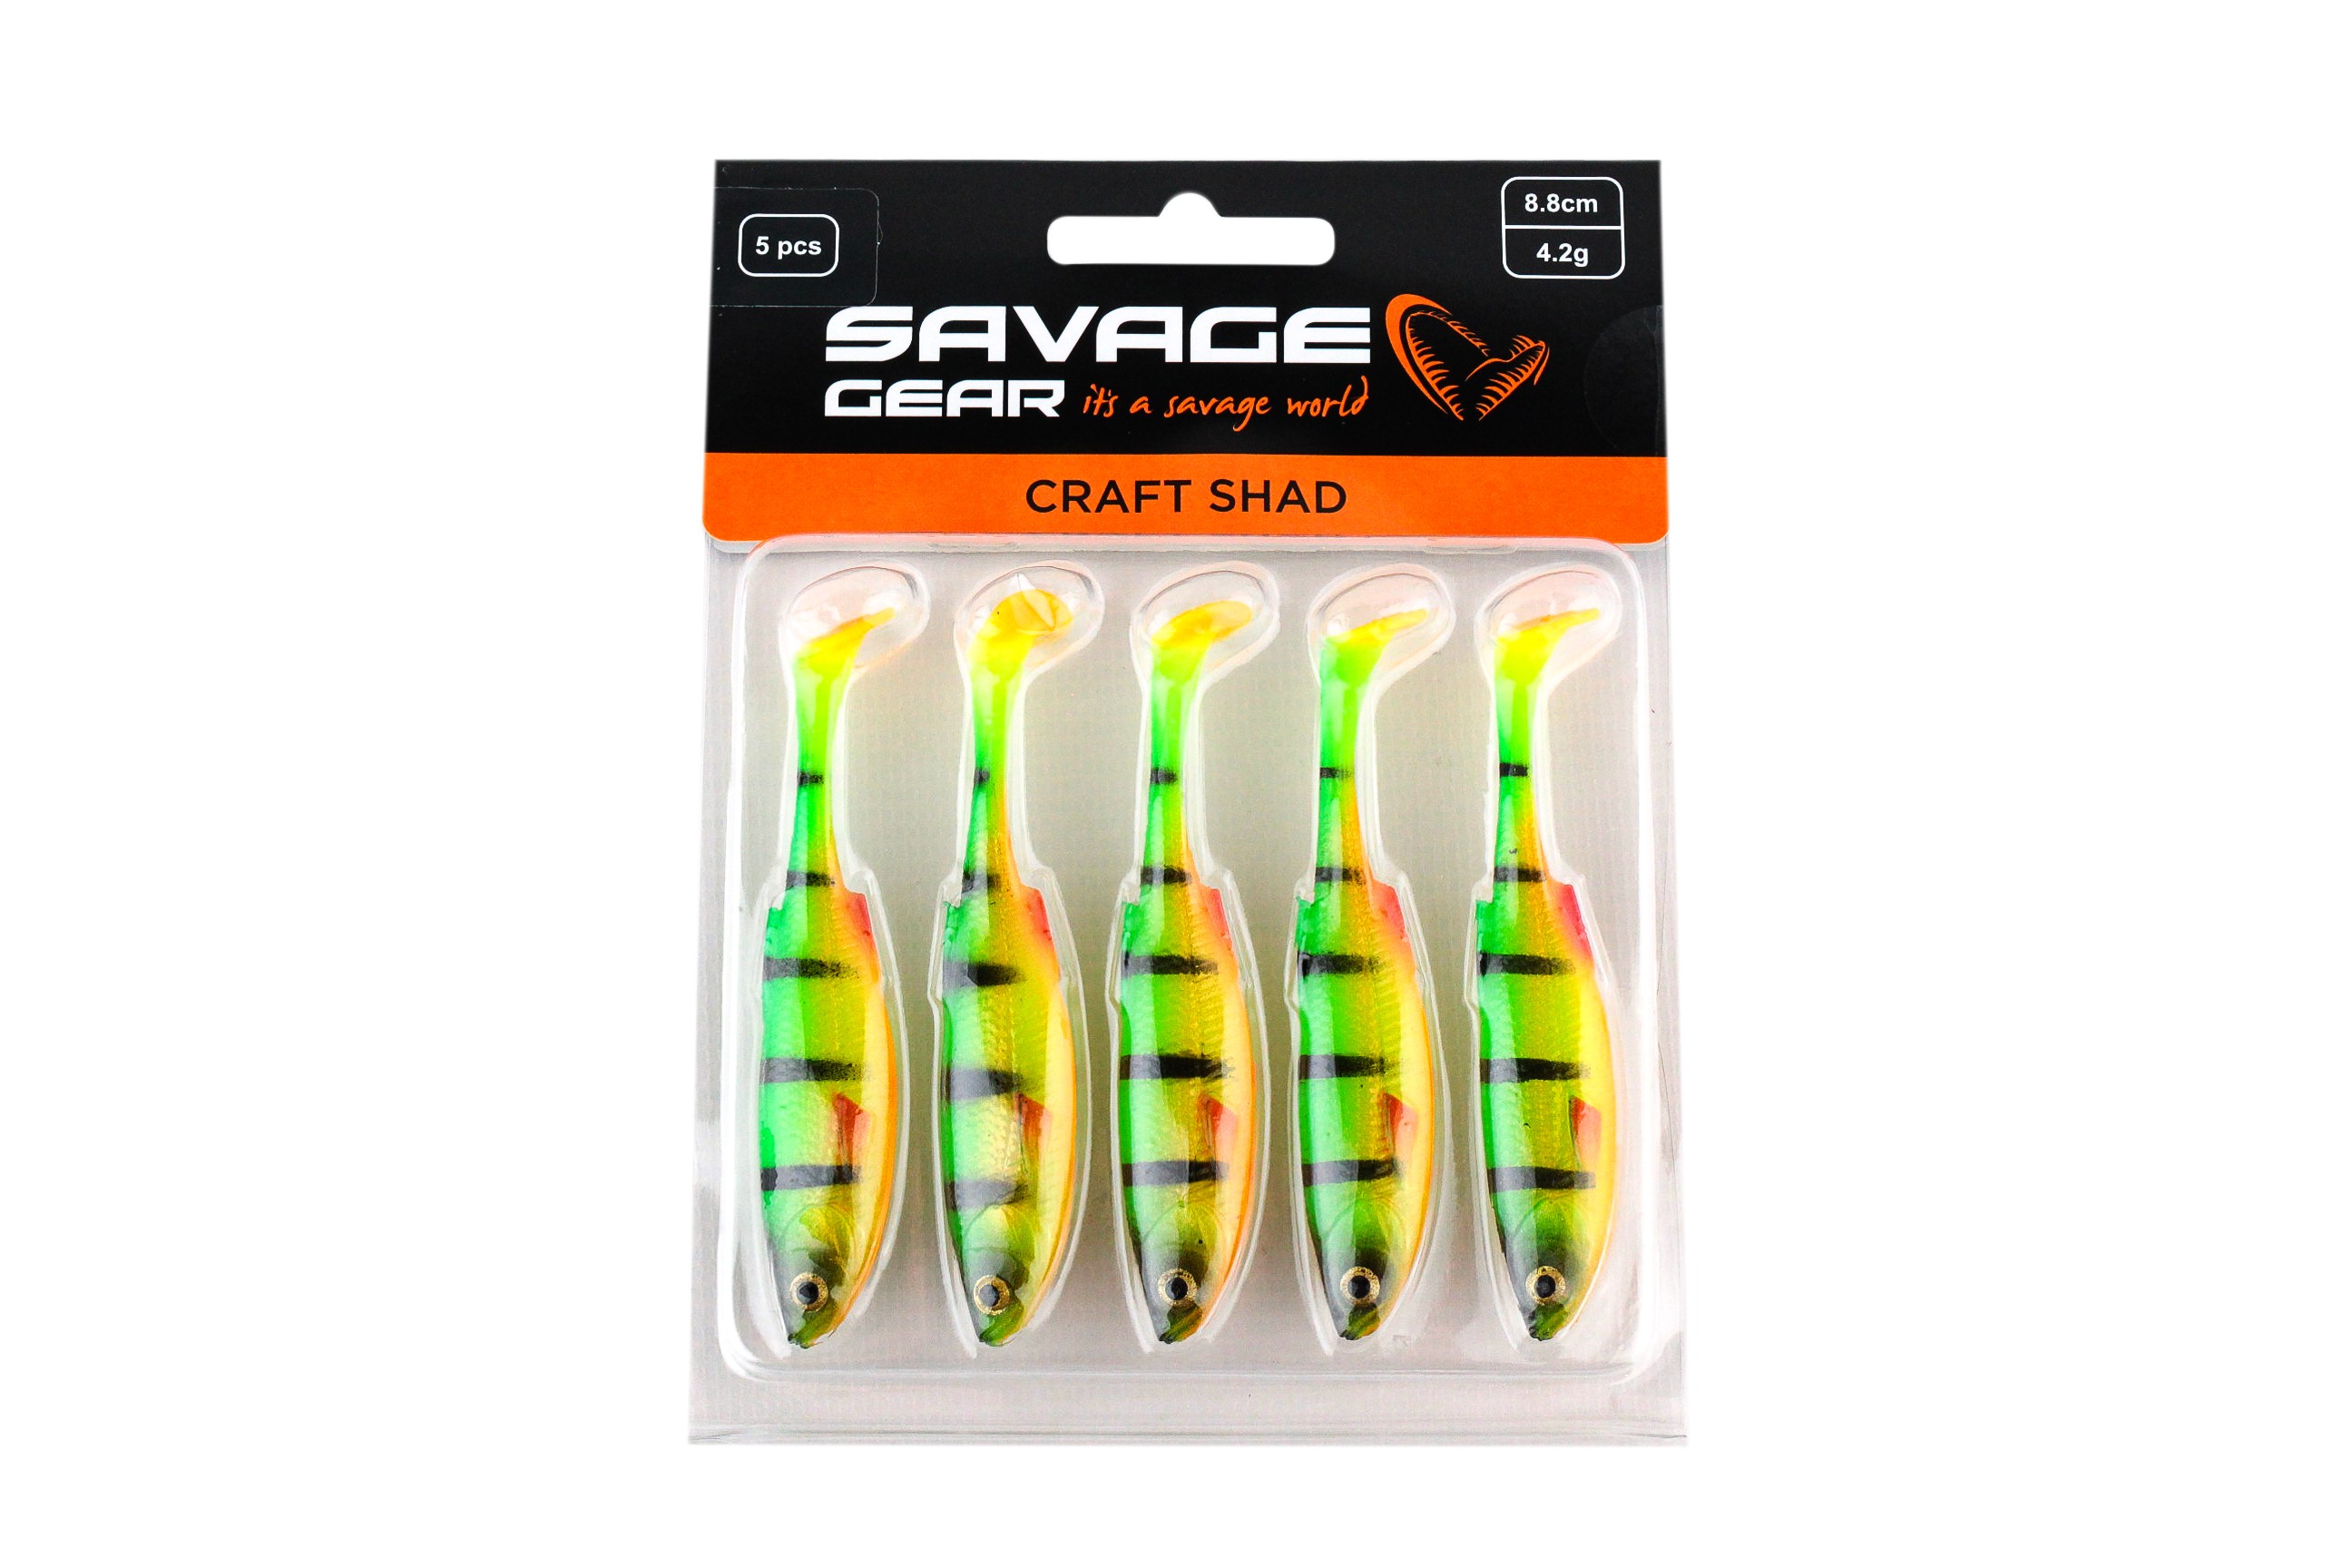 Приманка Savage Gear Craft shad 8,8см 4,2гр firetiger уп.5шт - фото 1